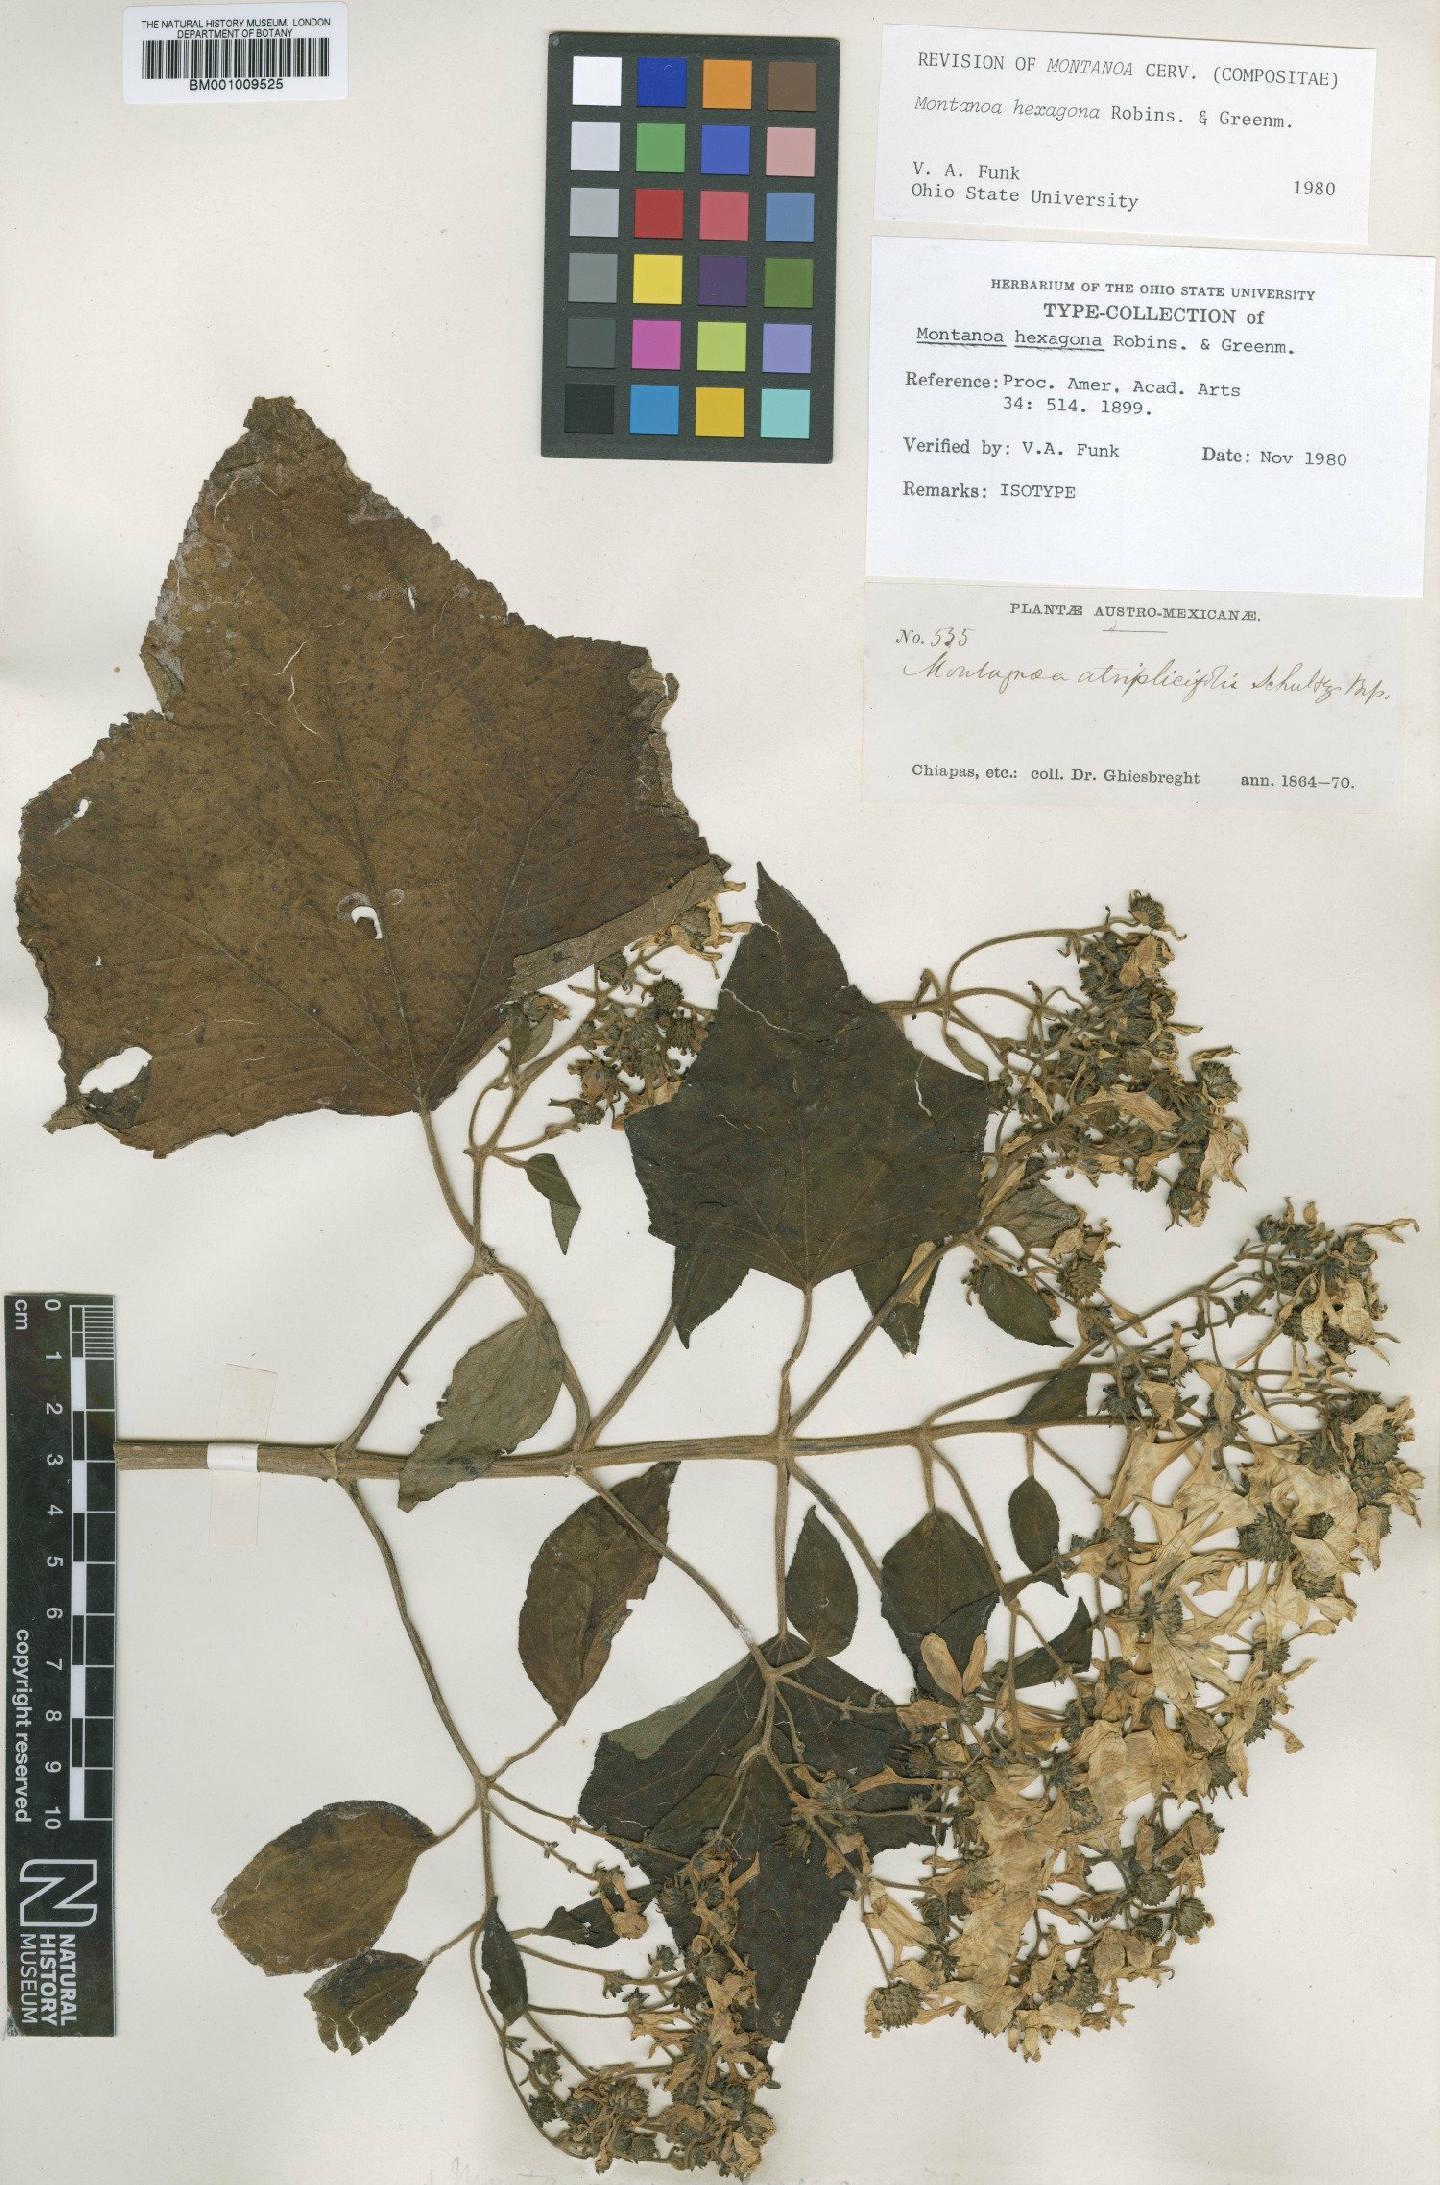 To NHMUK collection (Montanoa hexagona B.L.Rob. & Greenm.; Isotype; NHMUK:ecatalogue:612269)